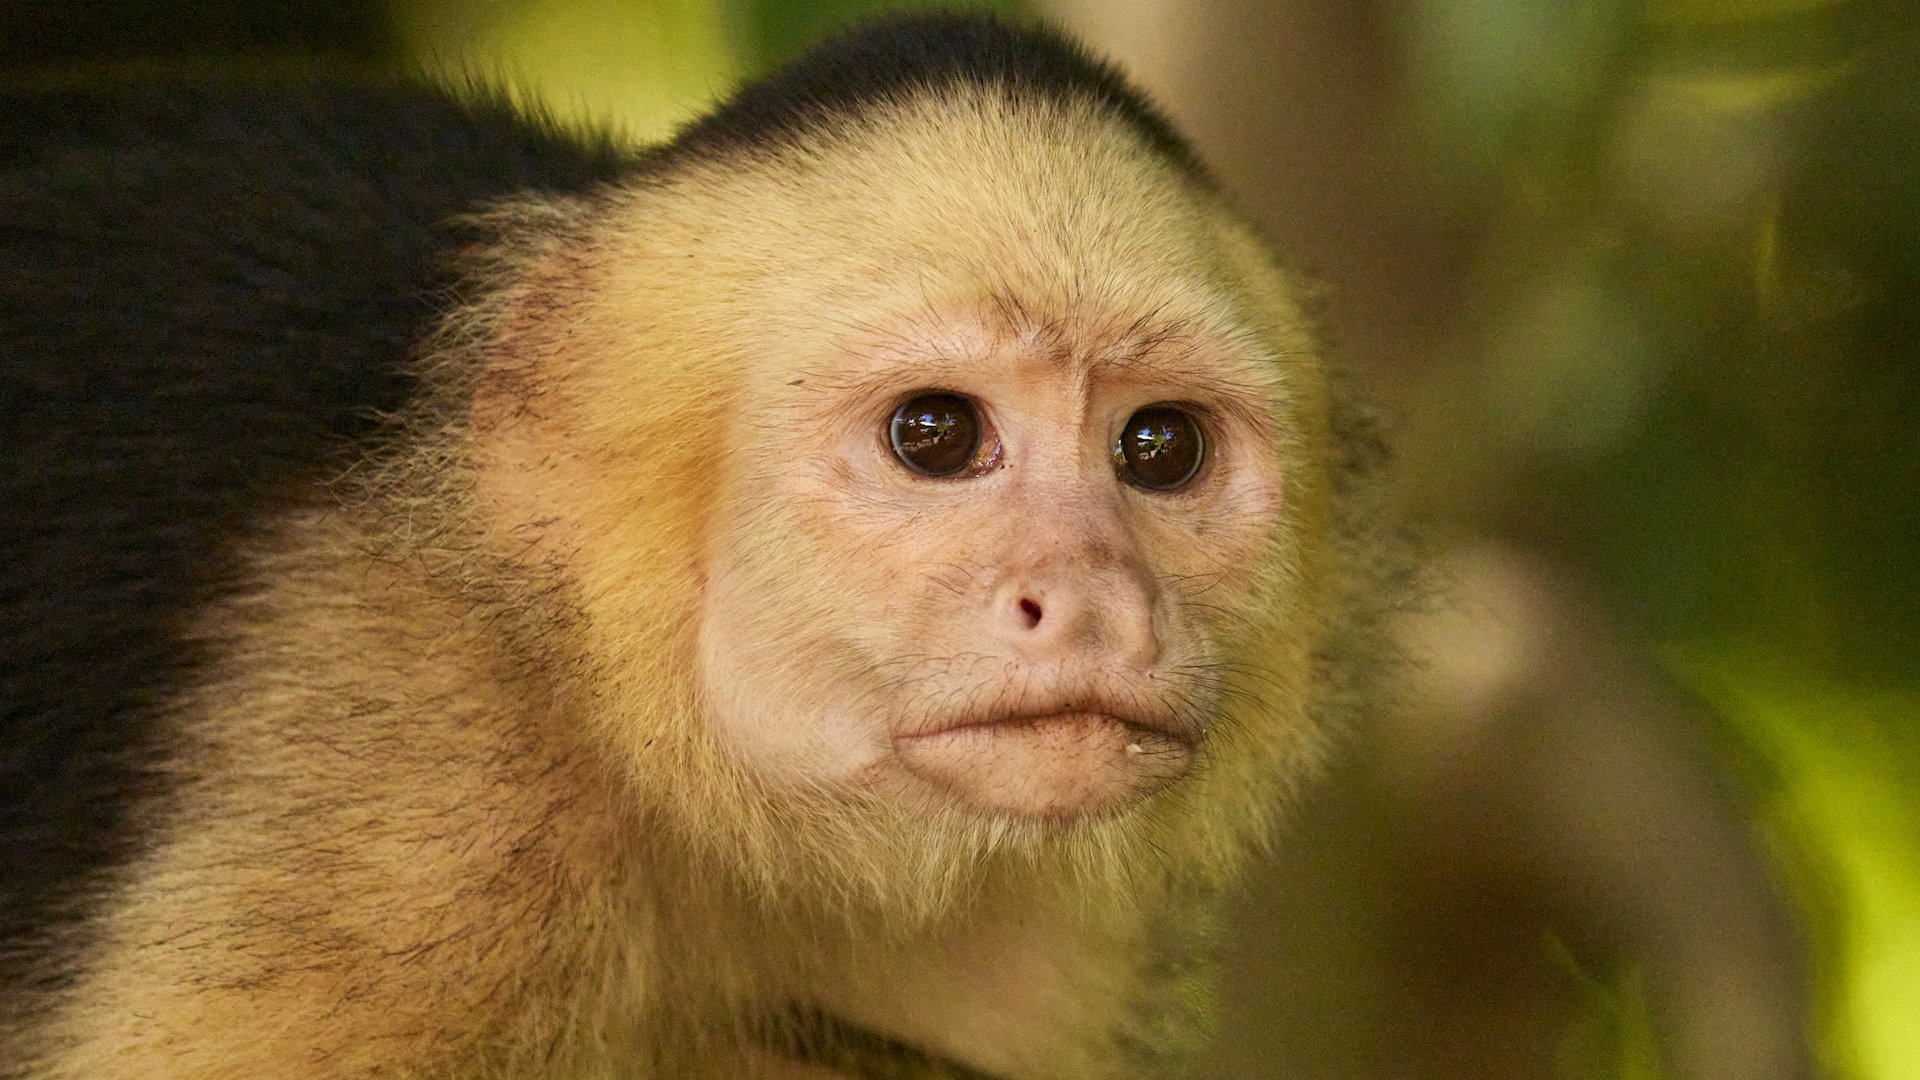 Capuchin monkey looking away - image 9